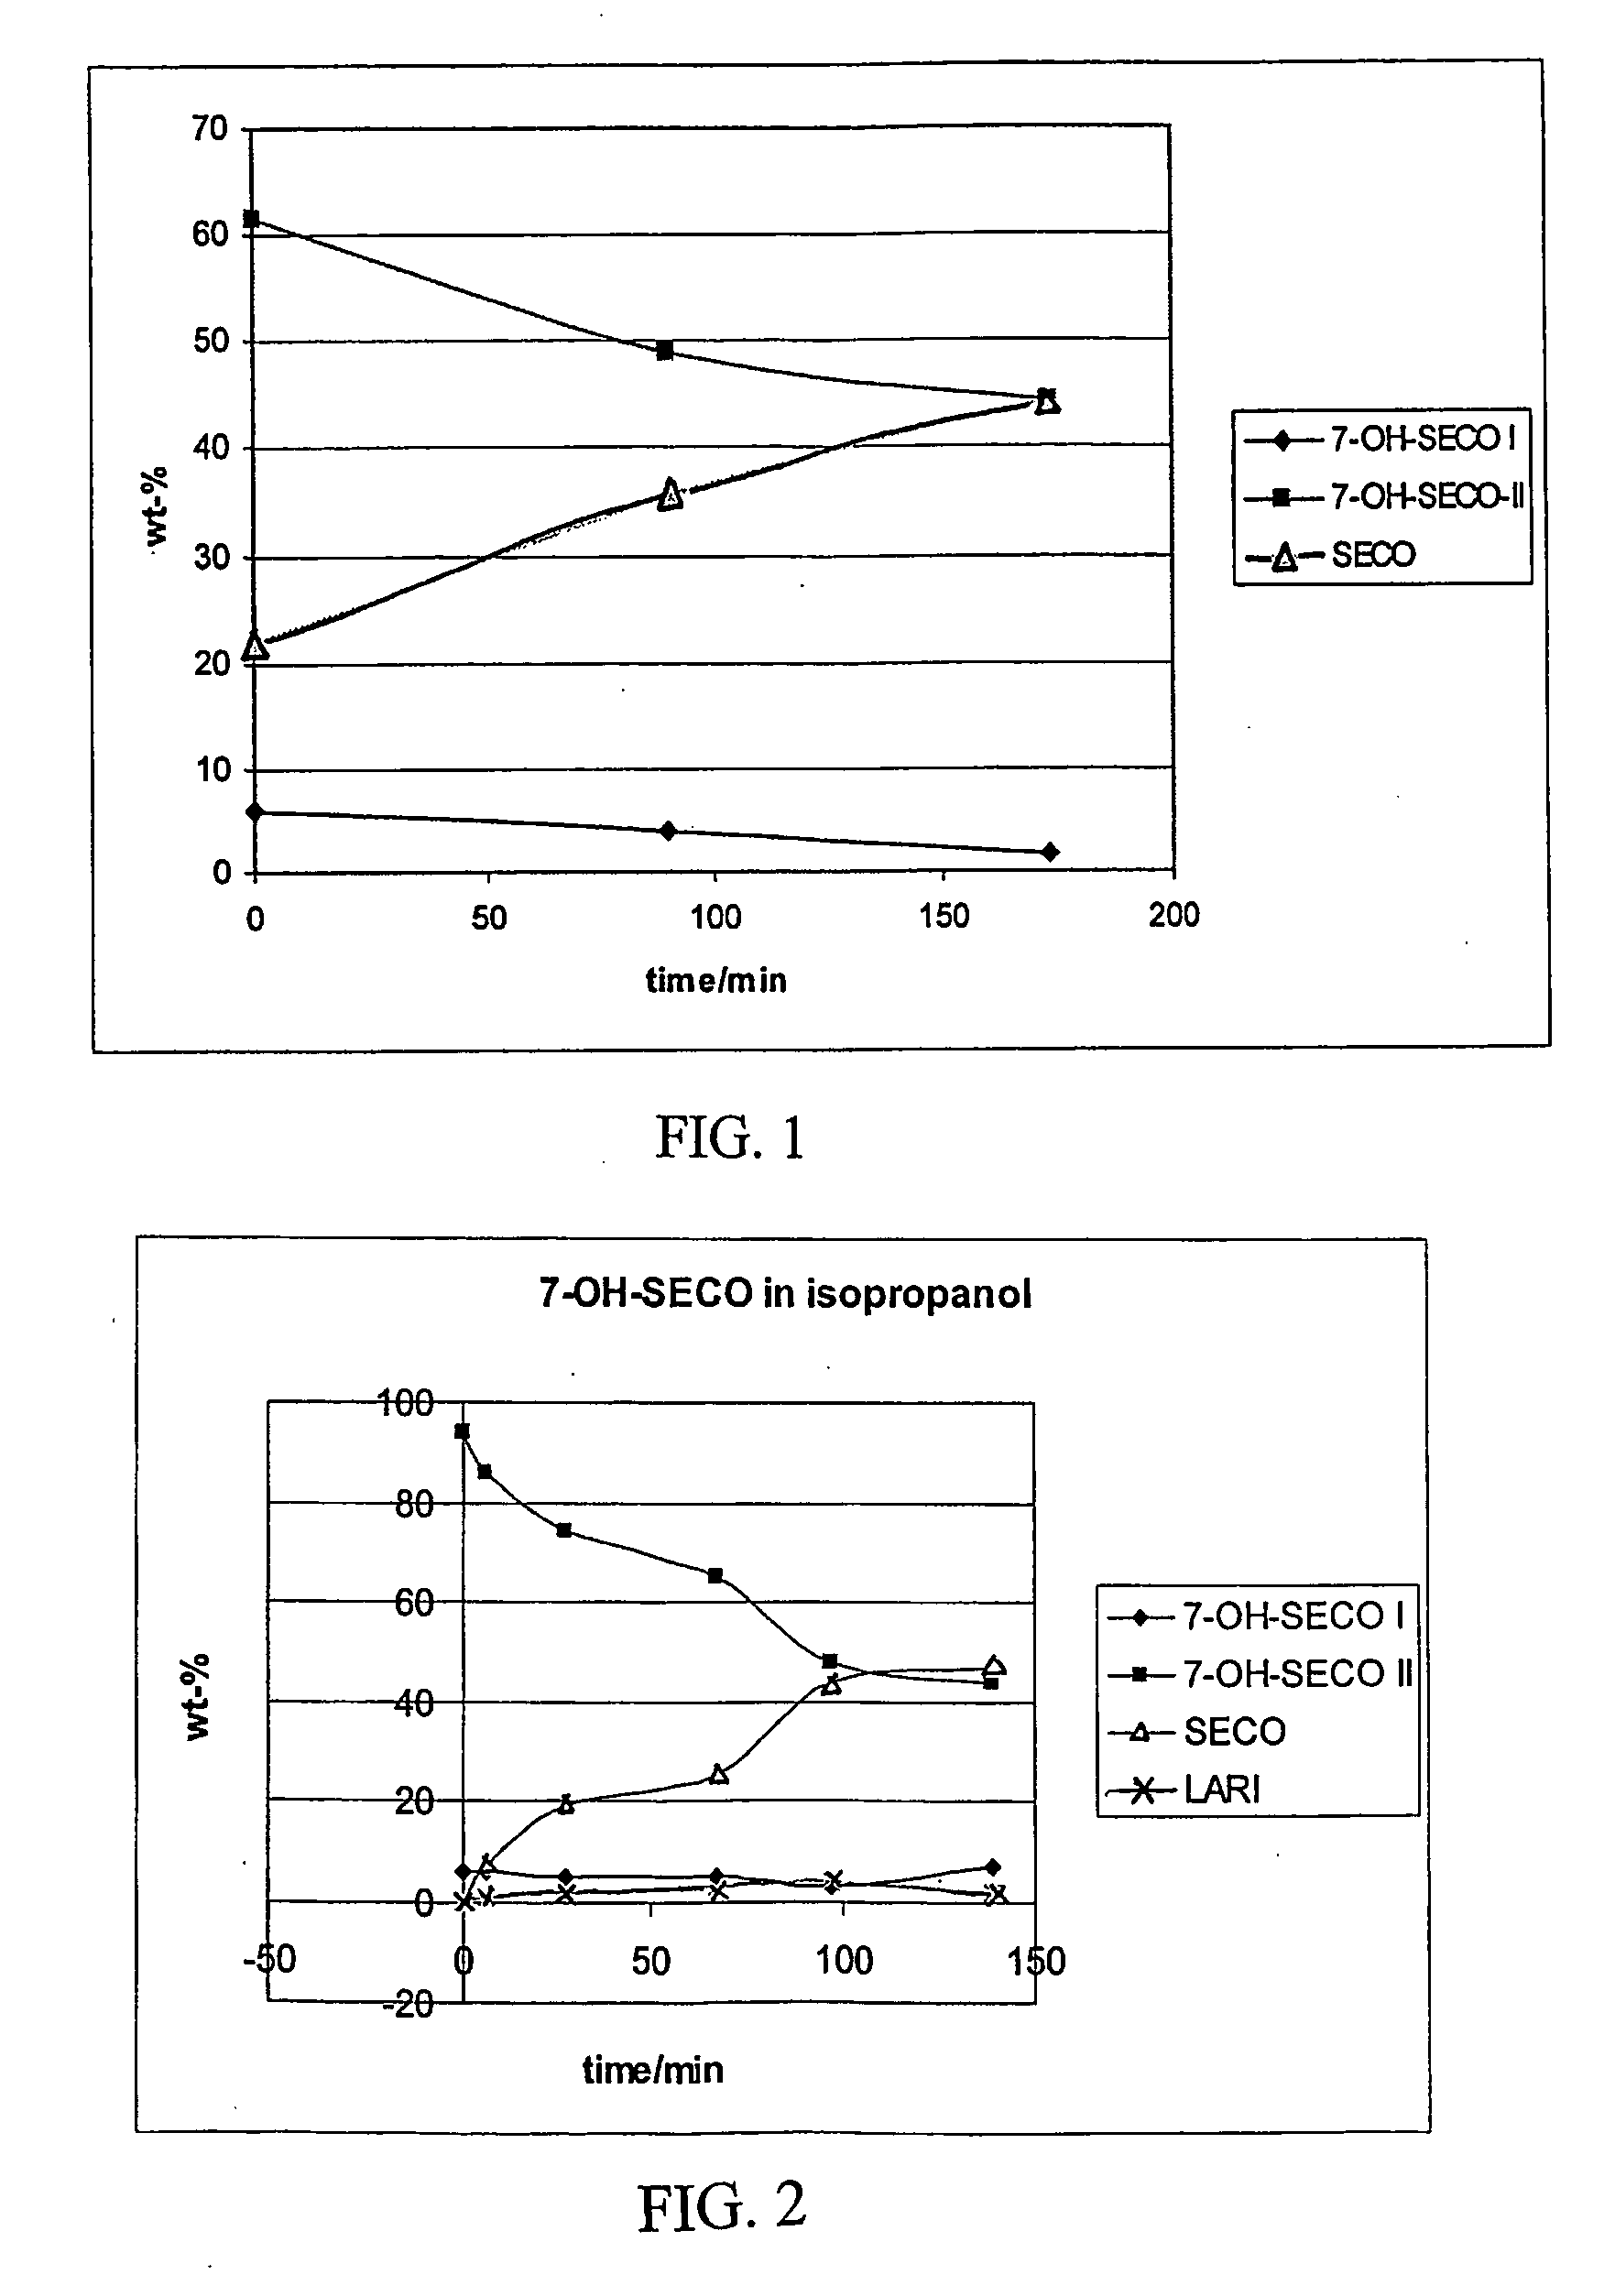 Method for the preparation of lariciresinol cyclolariciresinol and secoisolariciresinol